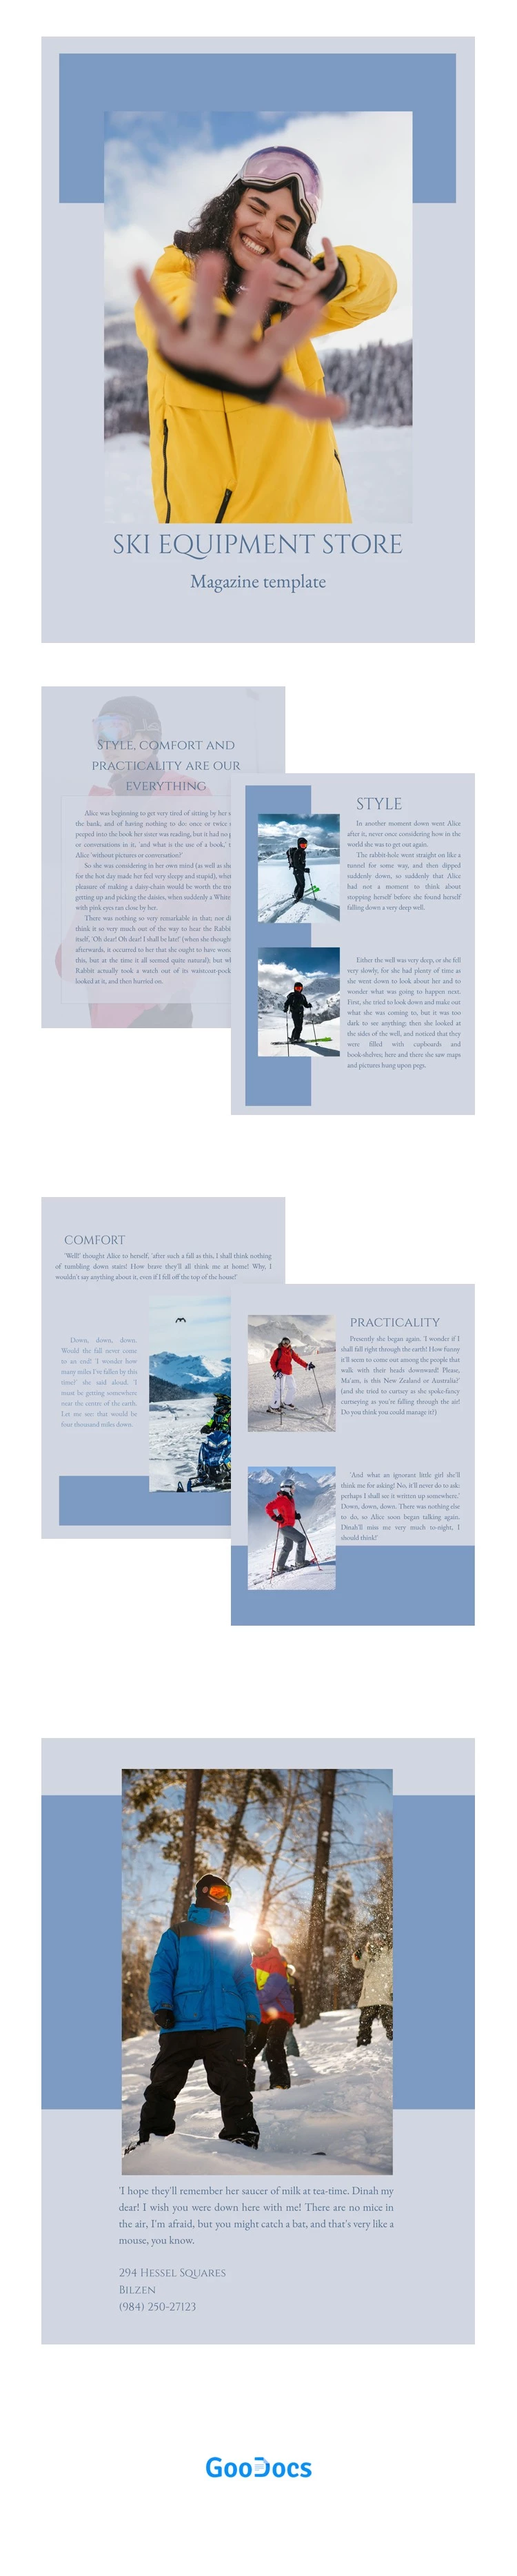 Magazine de magasin d'équipement de ski - free Google Docs Template - 10061948